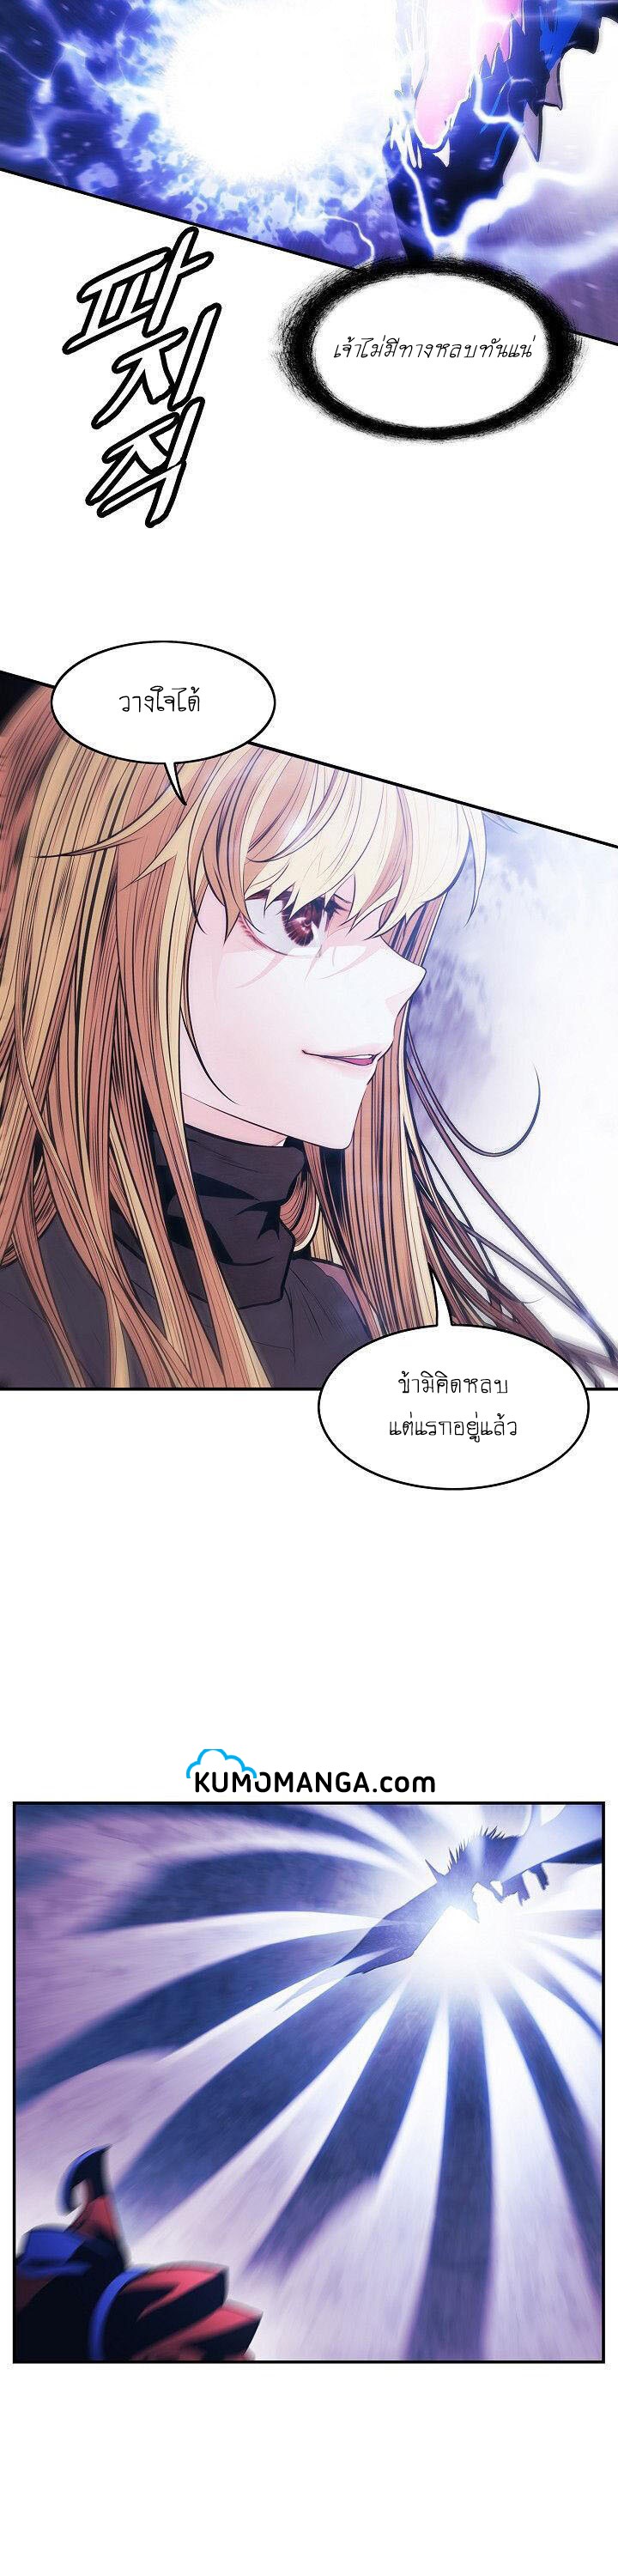 MookHyang – Dark Lady 101 (11)